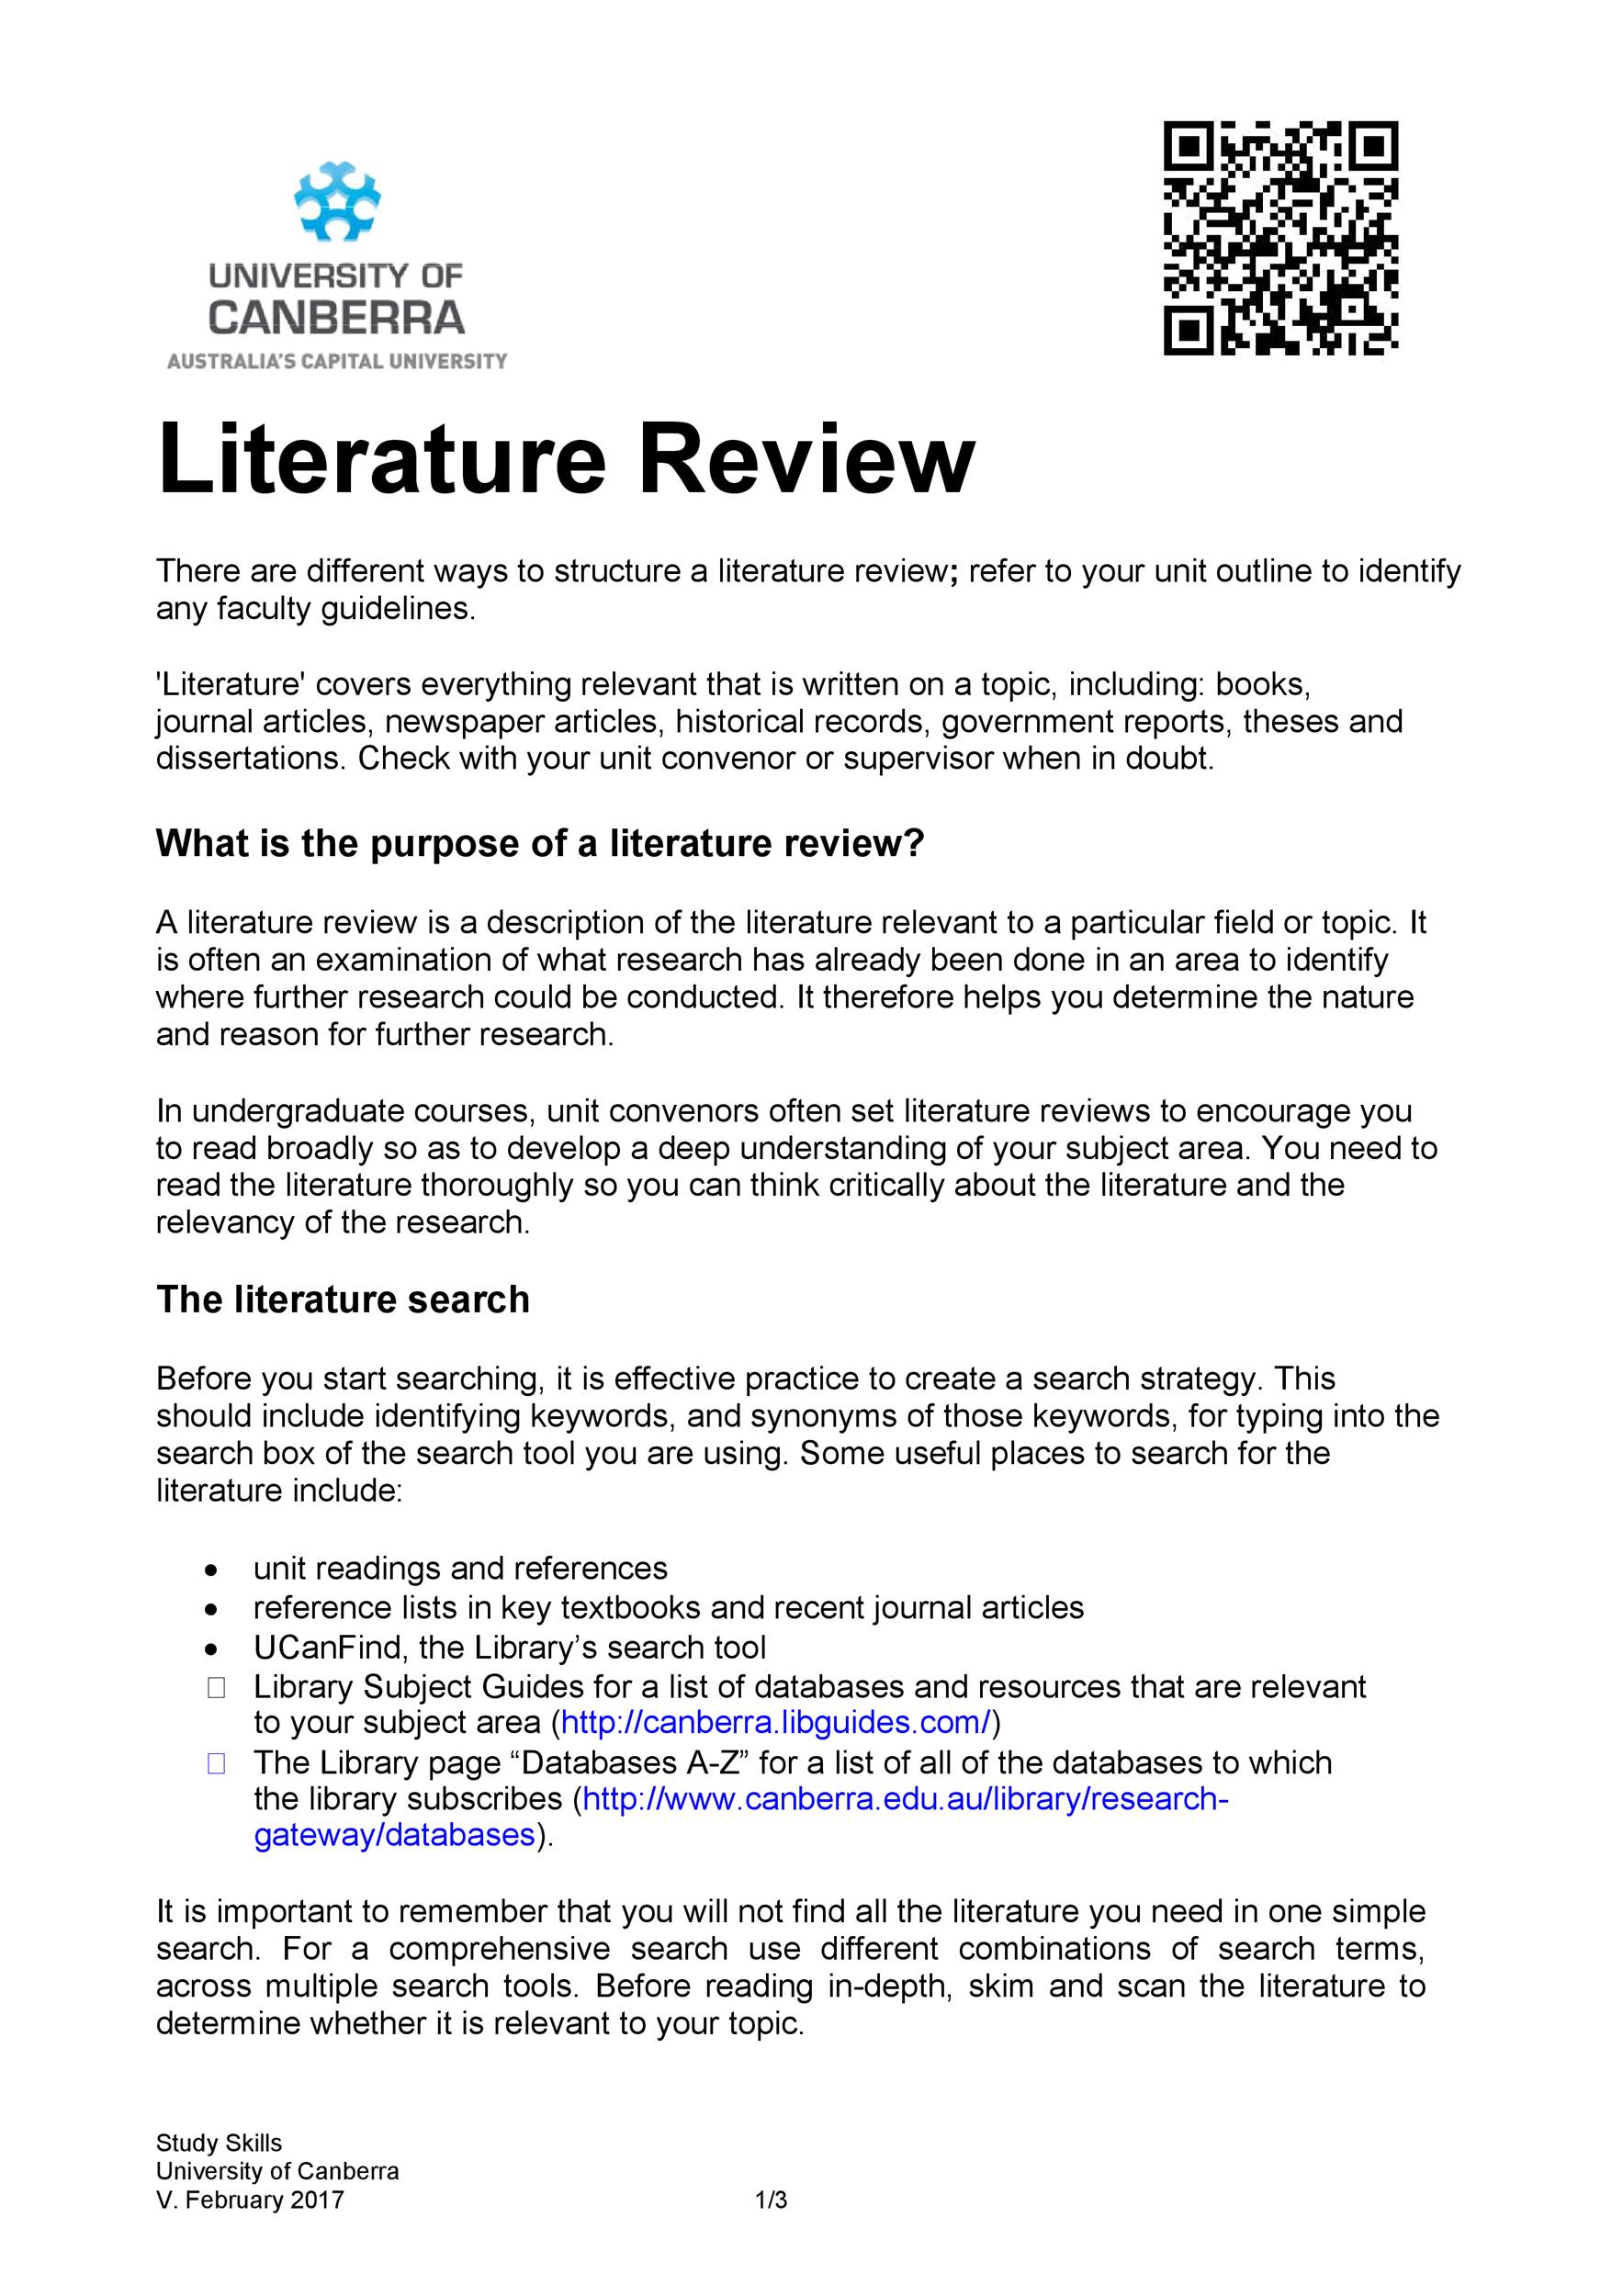 dissertation literature review tense